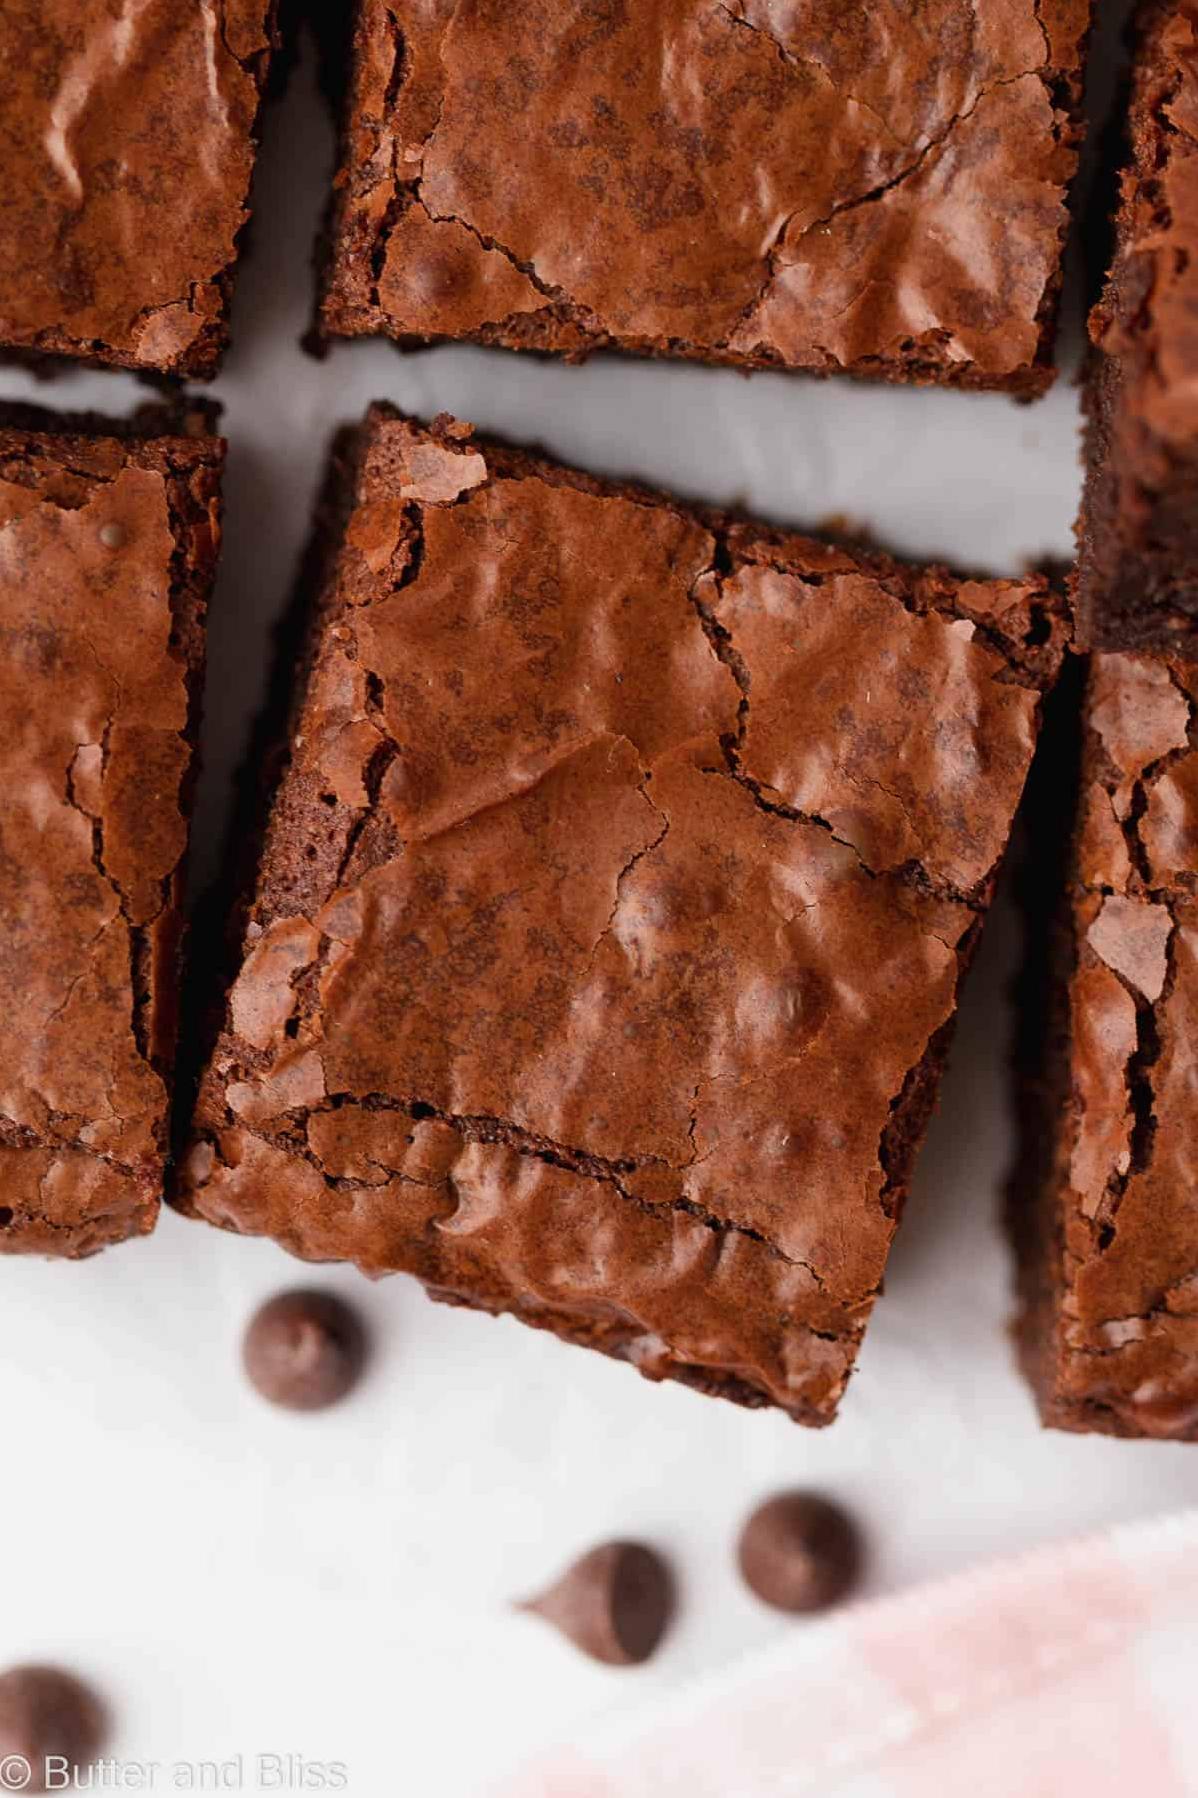  Moist and chocolaty gluten-free brownies